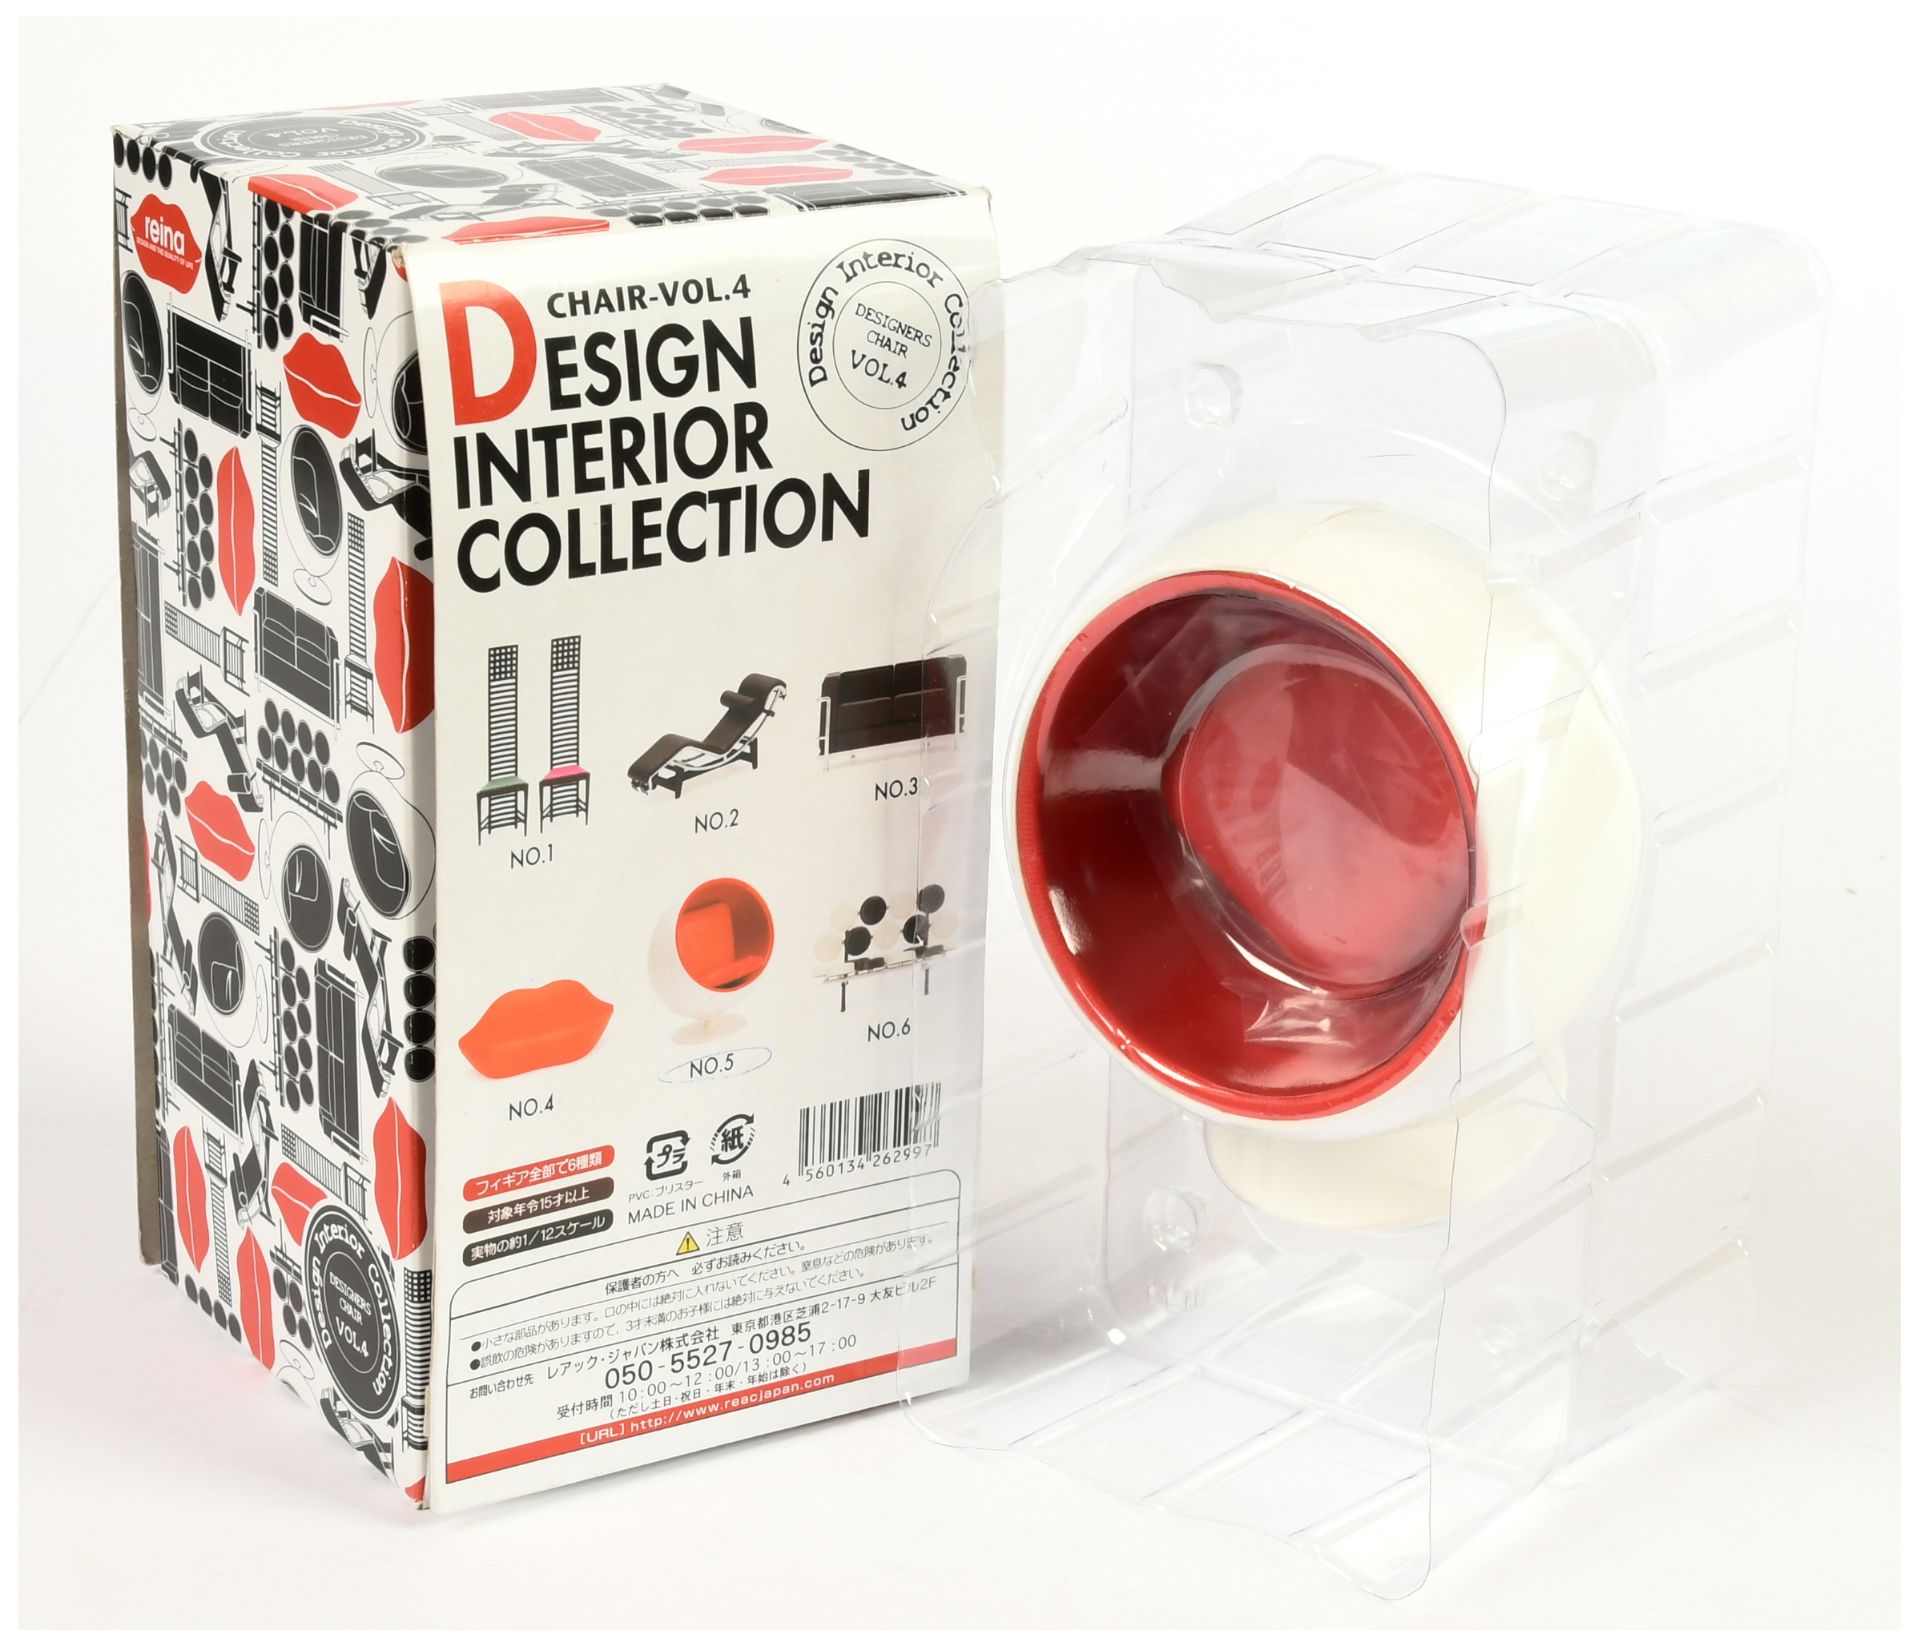  (Design Interior Collection miniature designer chairs - Image 2 of 2